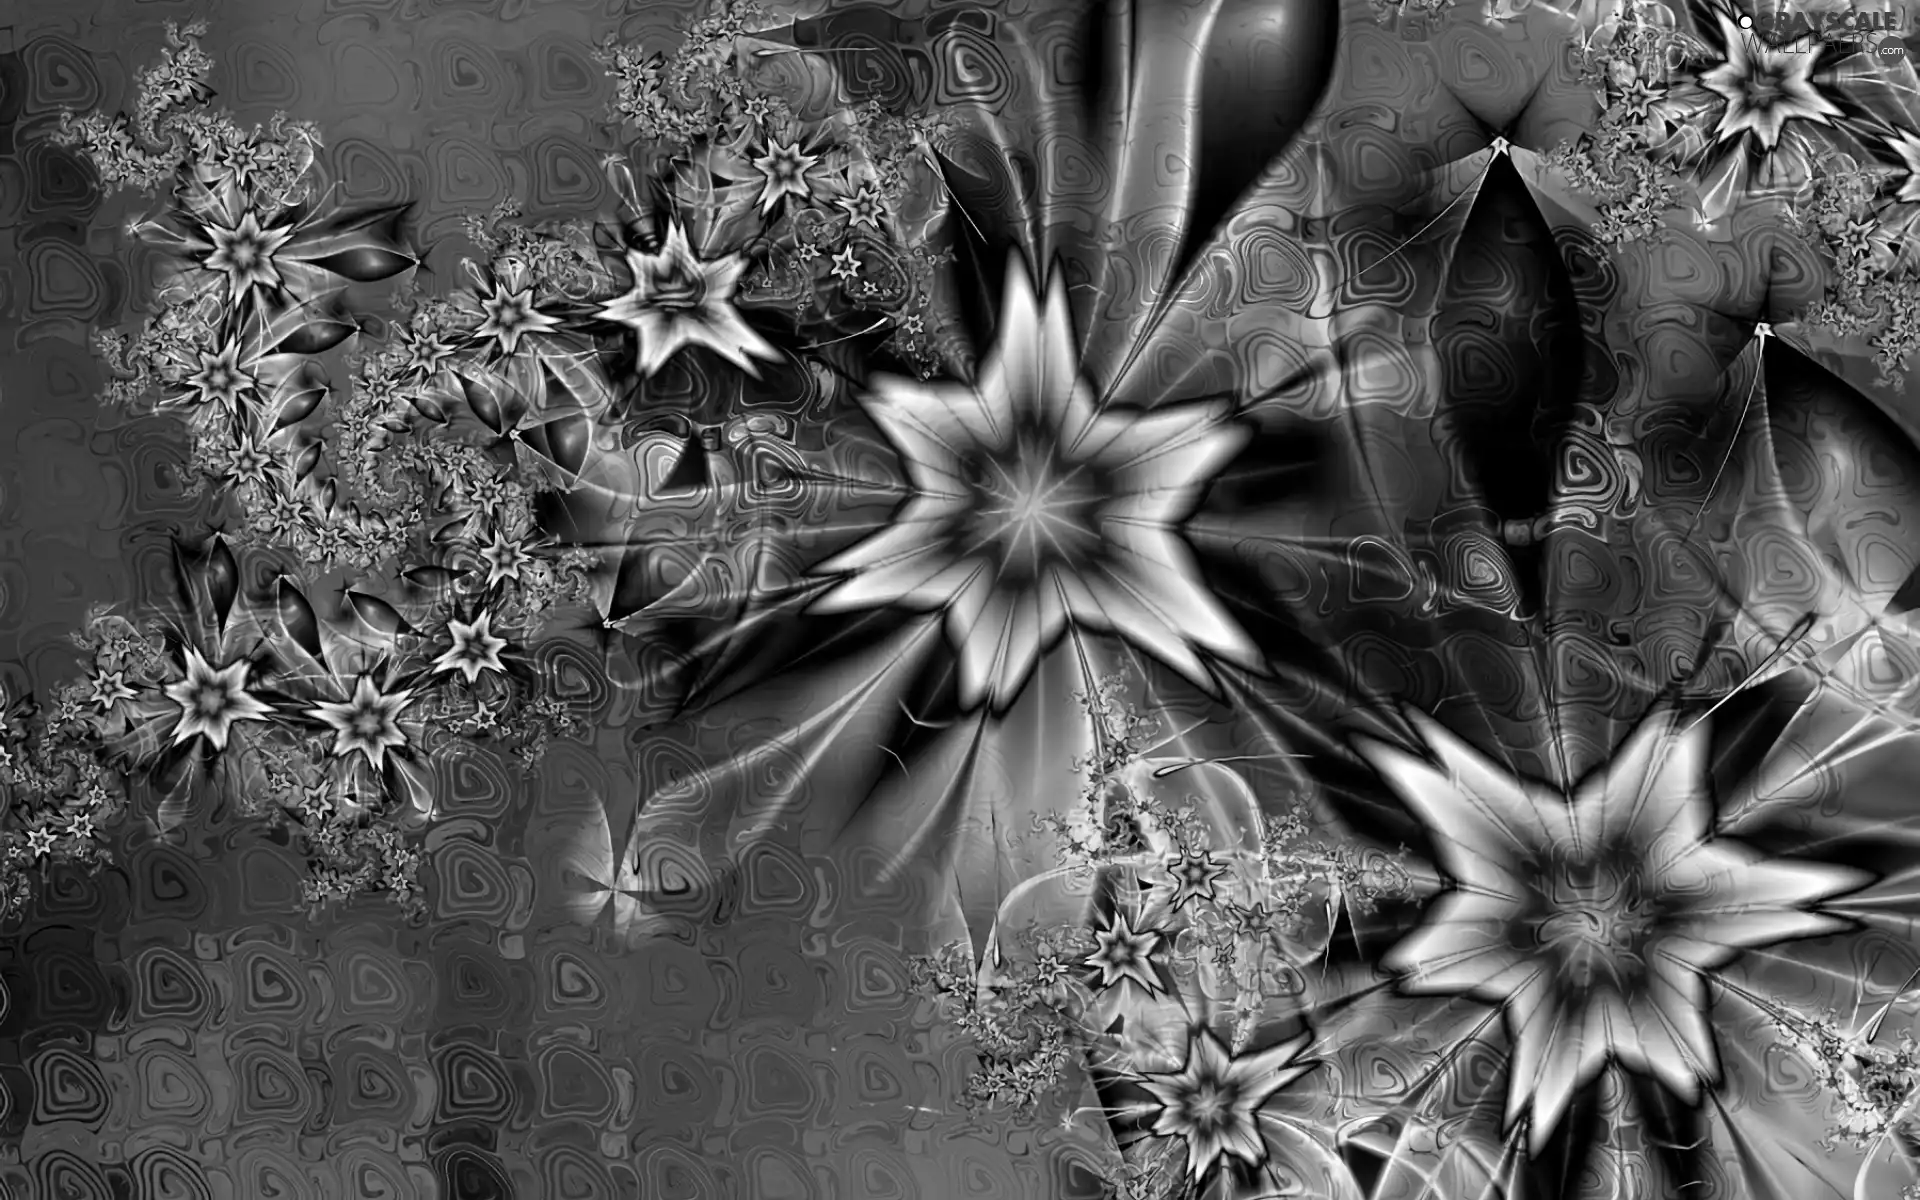 Fraktal, abstraction, Flowers